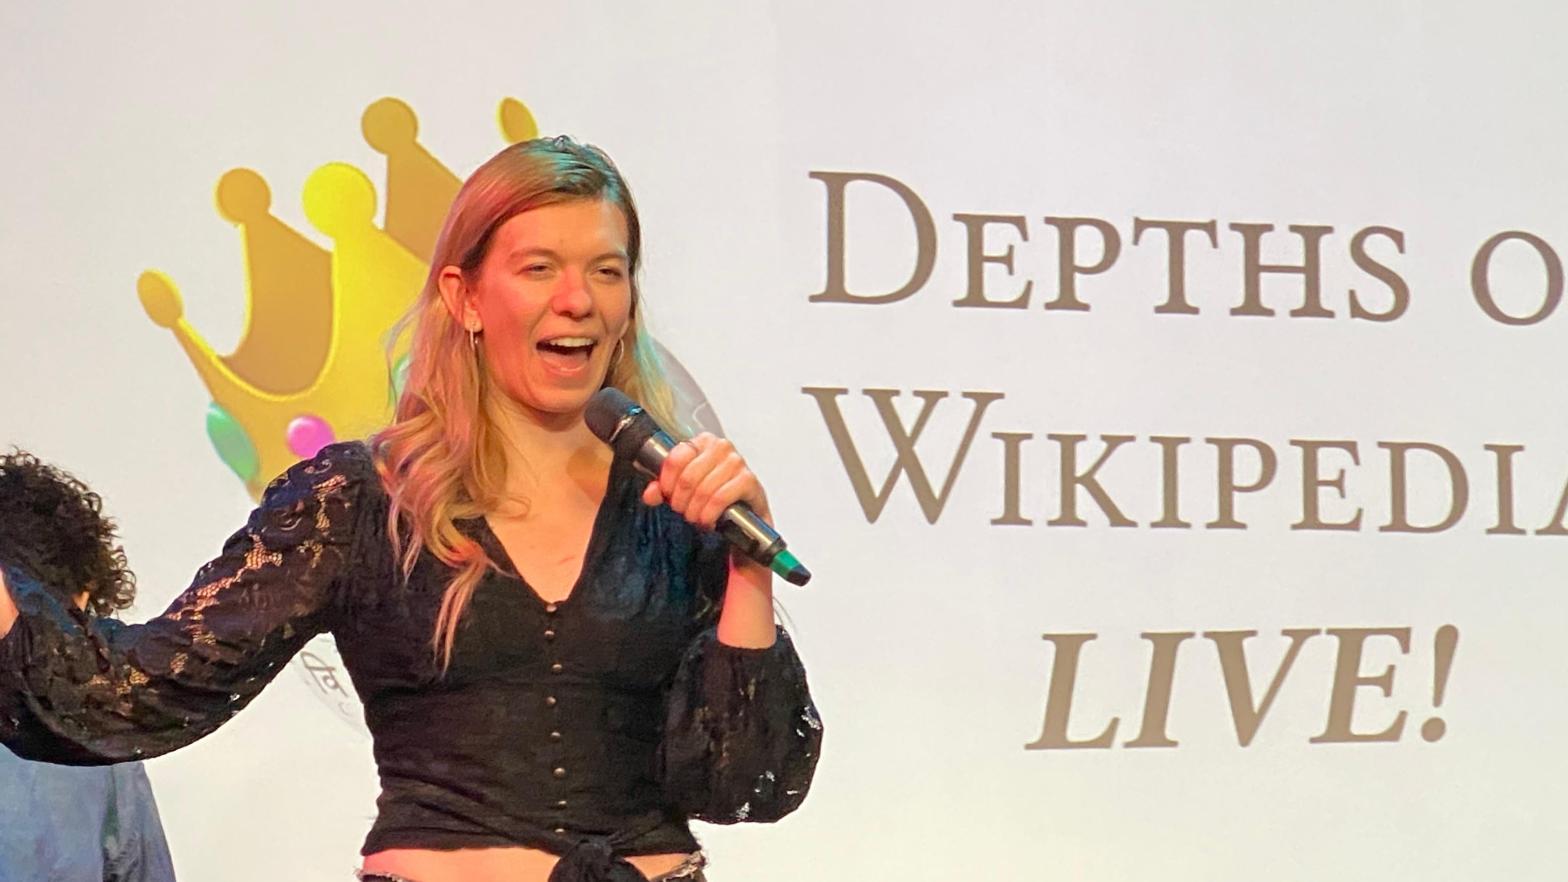 @depthsofwikipedia, aka Annie Rauwerda, performing at Depths of Wikipedia Live! (Photo: Blake Montgomery/Gizmodo)